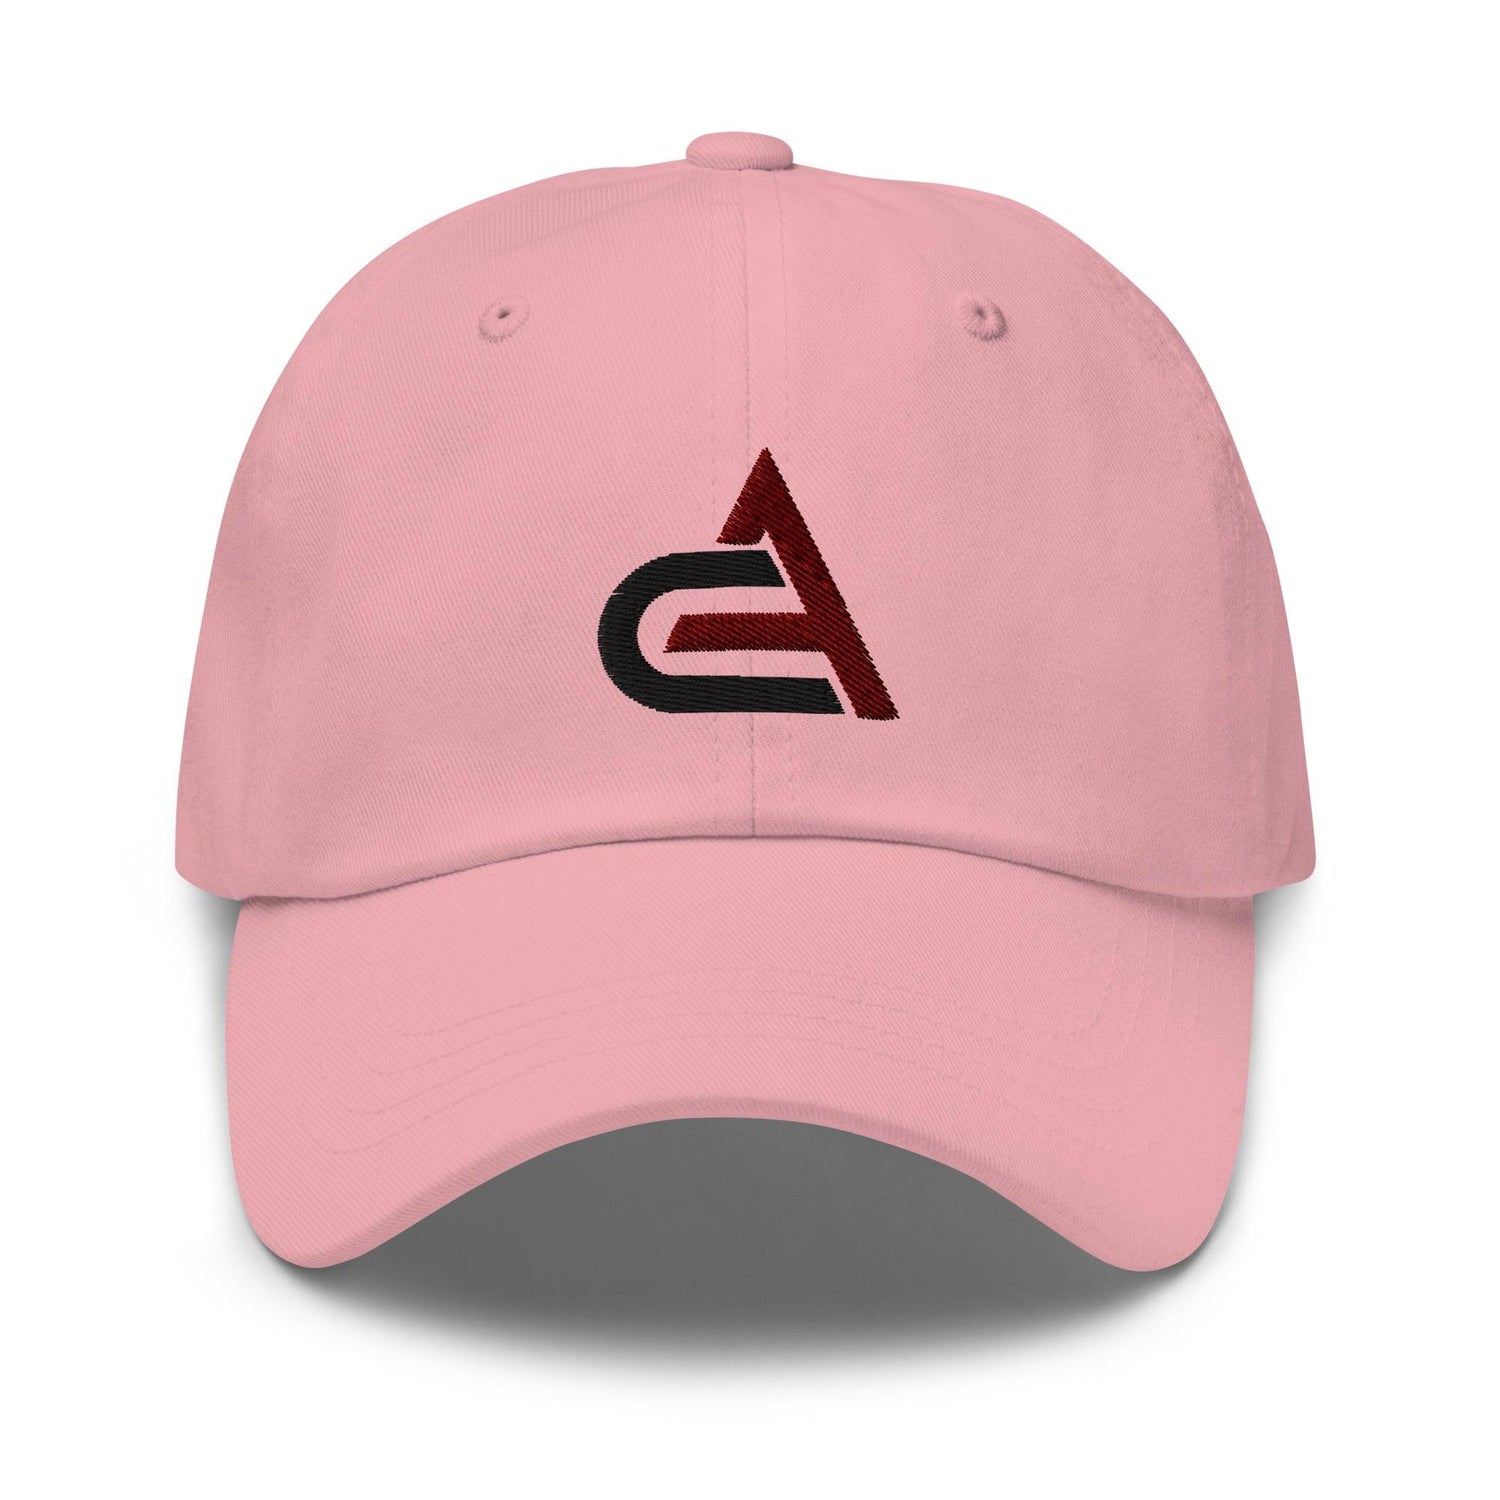 Cade Austin "Elite" hat - Fan Arch